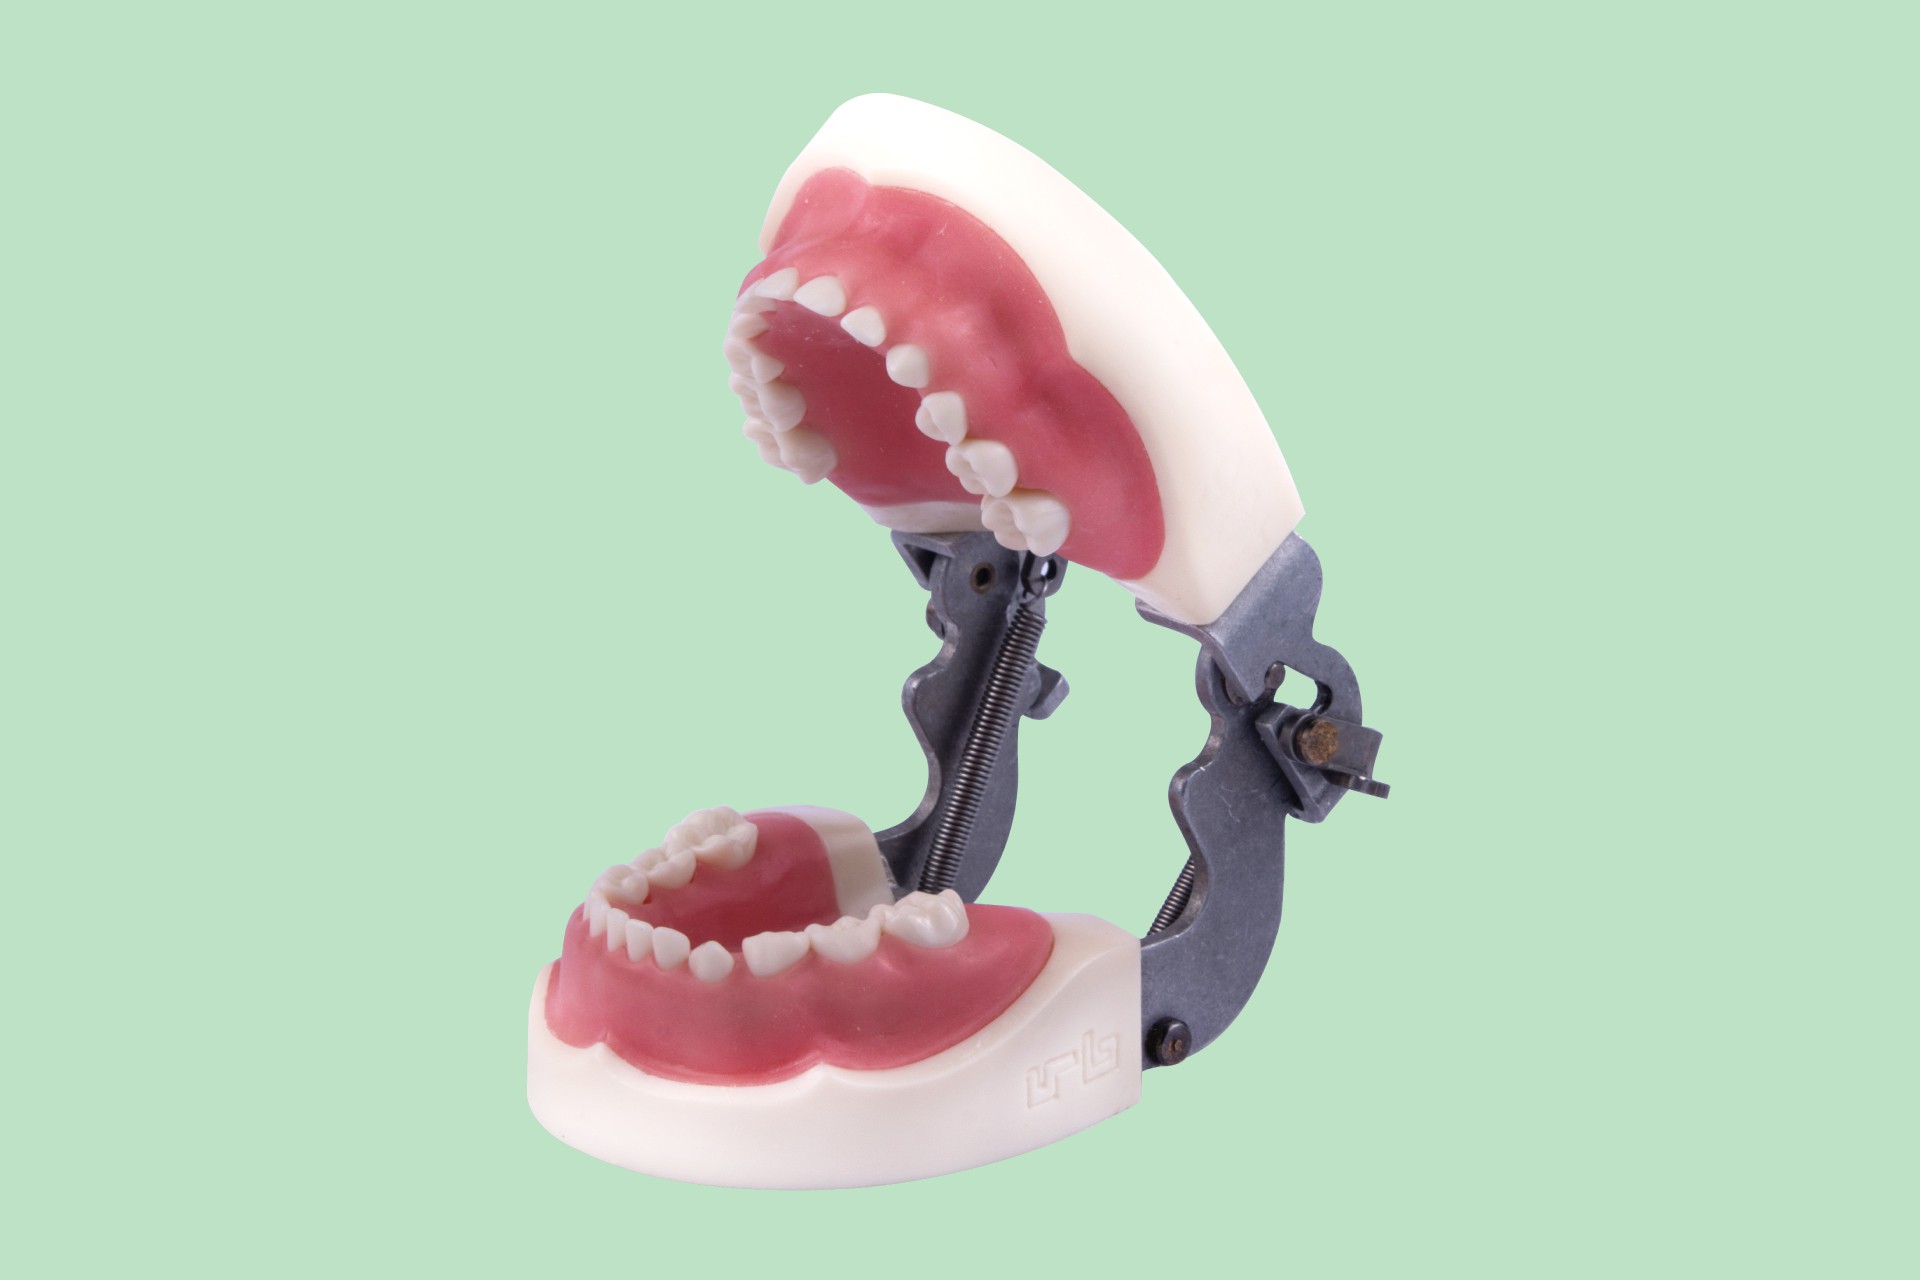 مدل تمرینی اطفال با لثه نرم با آرتیکولاتور 24 دندان